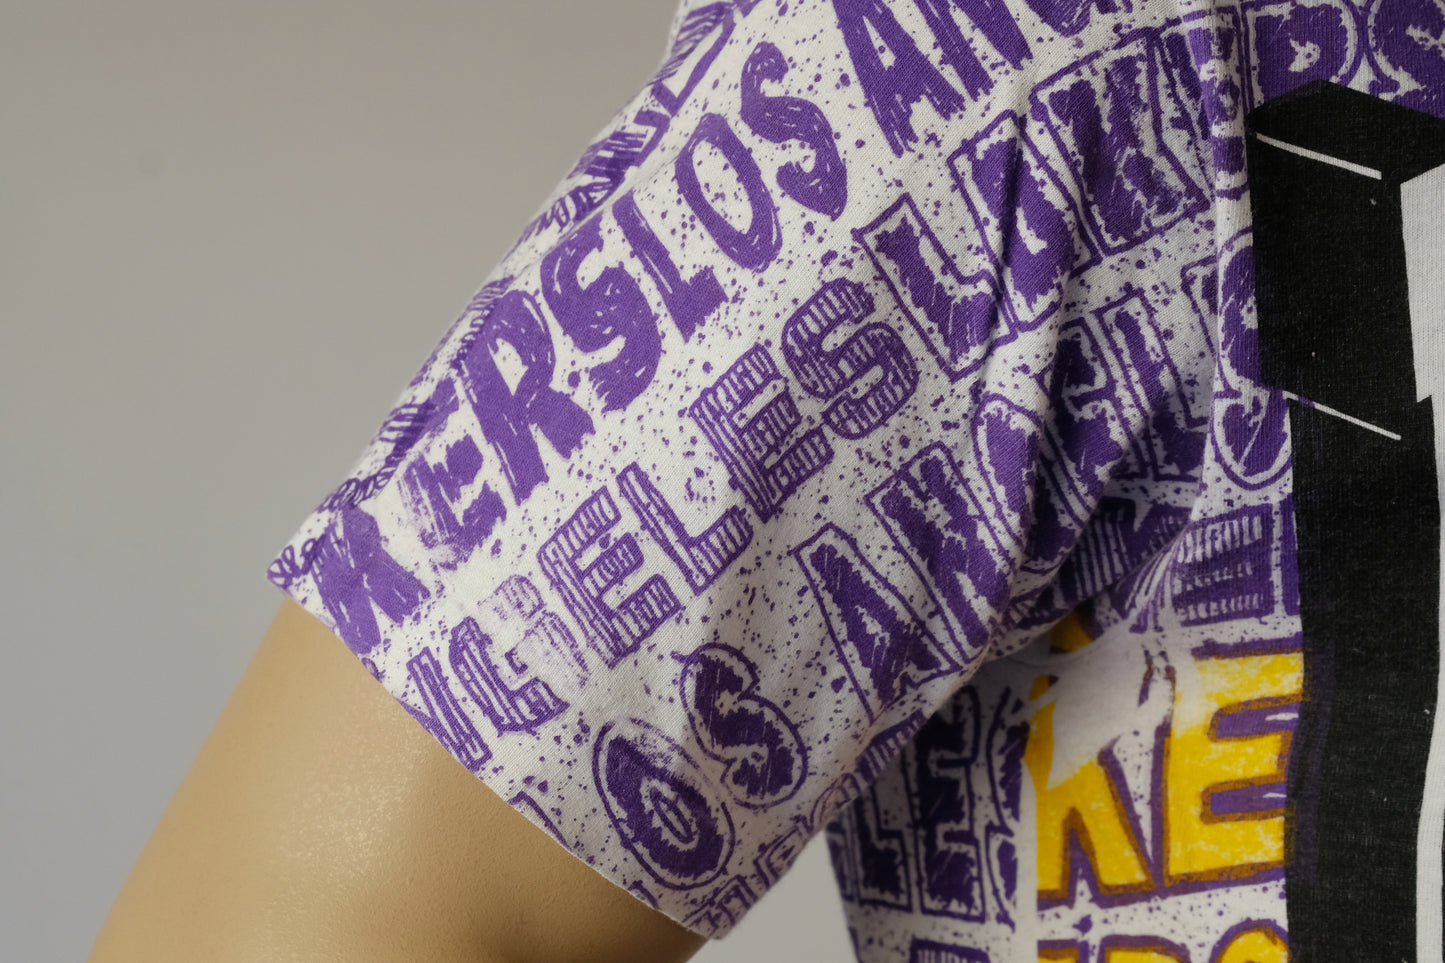 T-Shirt Los Angeles Lakers